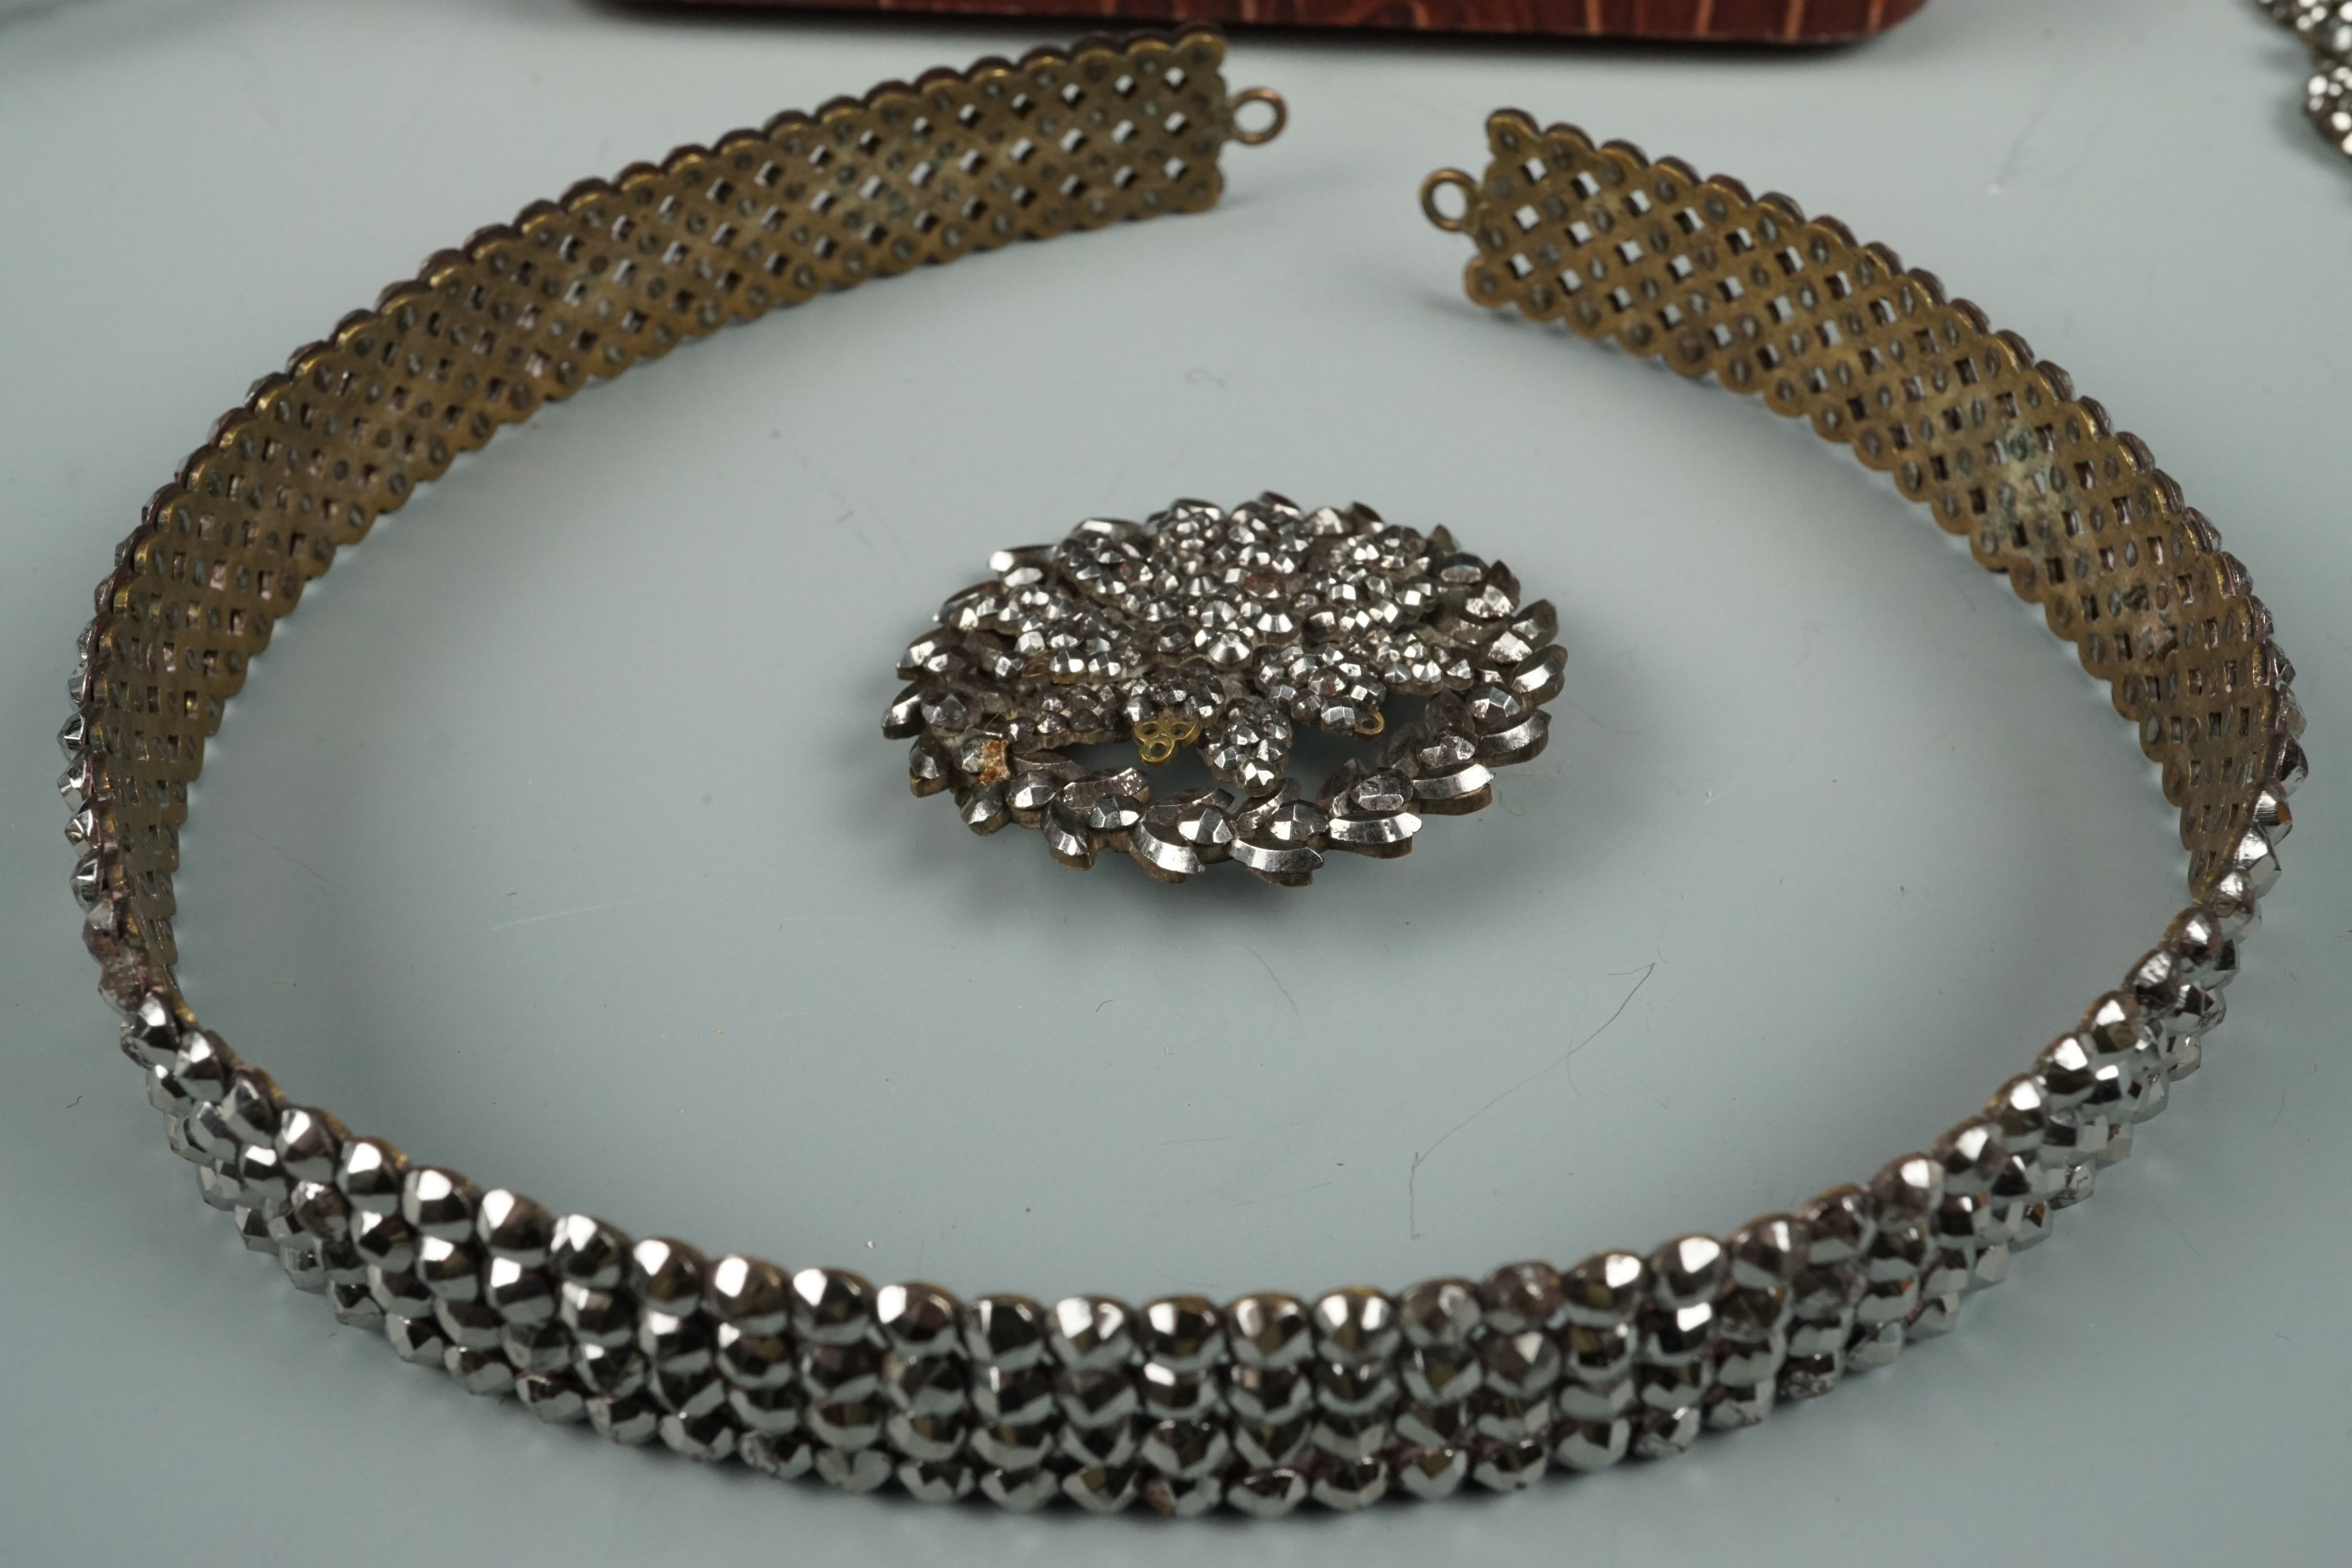 Antique cut steel jewellery parure, comprising pendant necklace, choker, bracelet, bangles, - Image 3 of 5